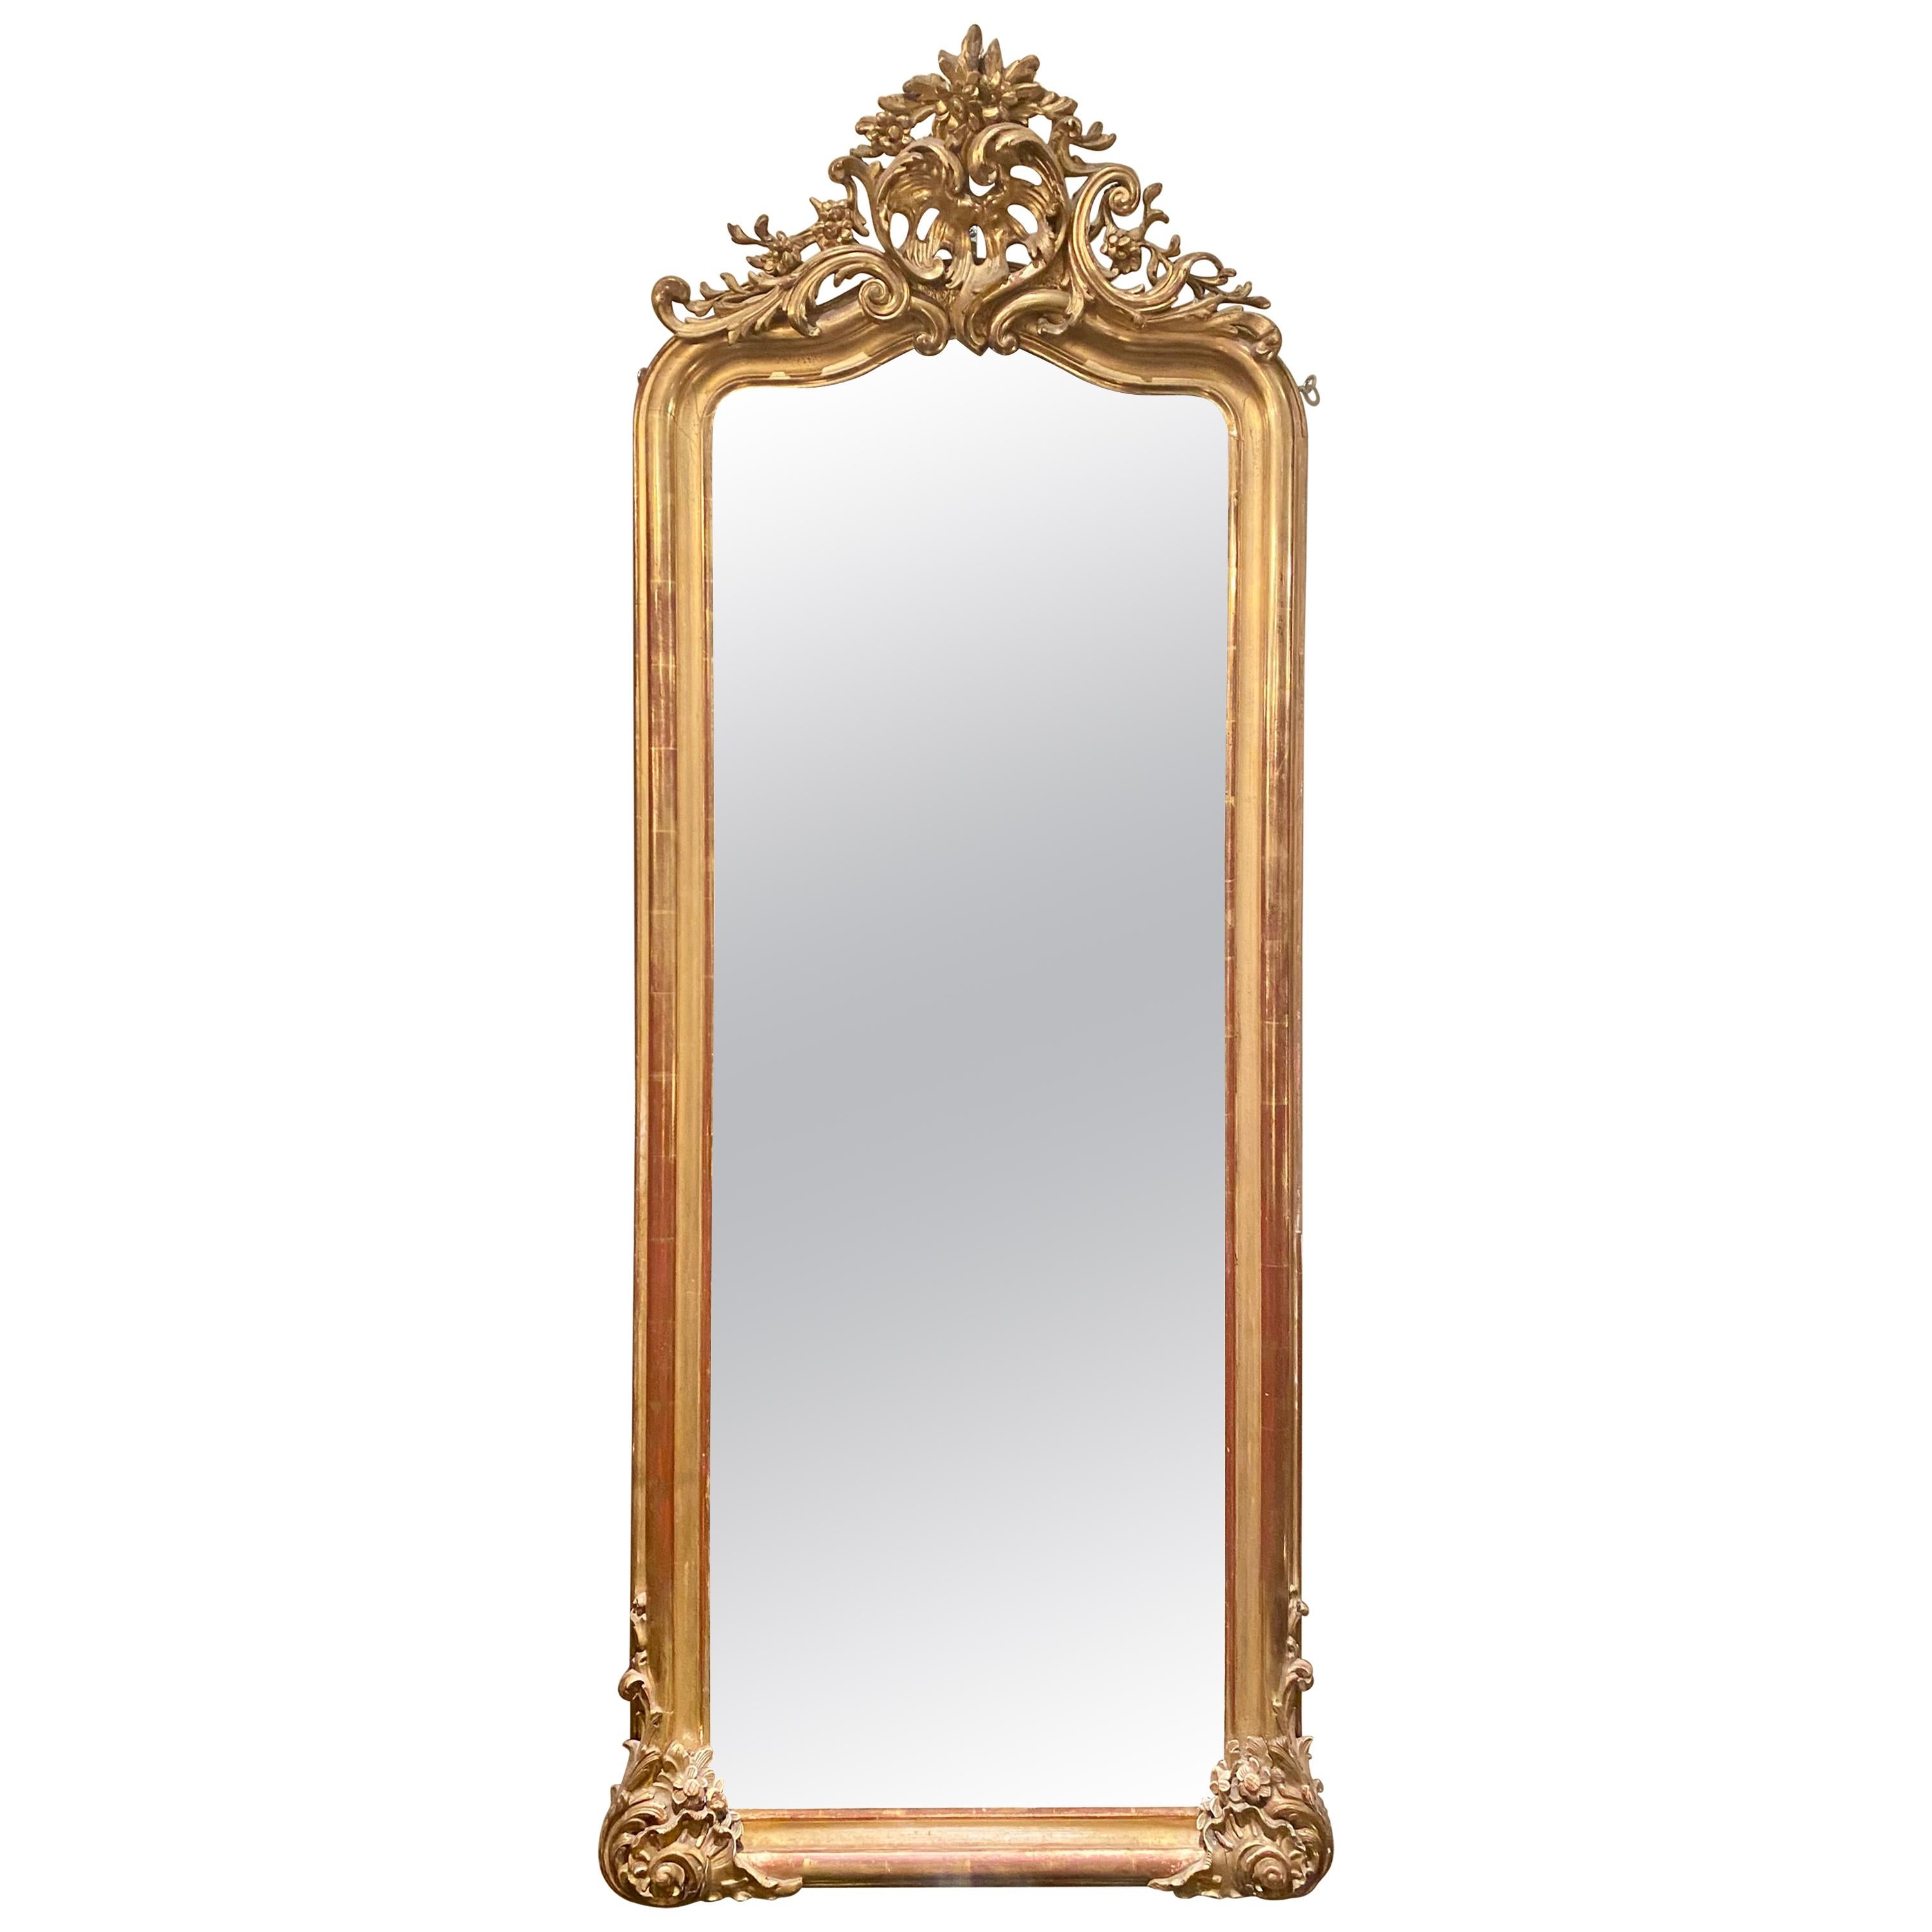 Antique French Louis XV Gold Leaf Beveled Mirror, circa 1870